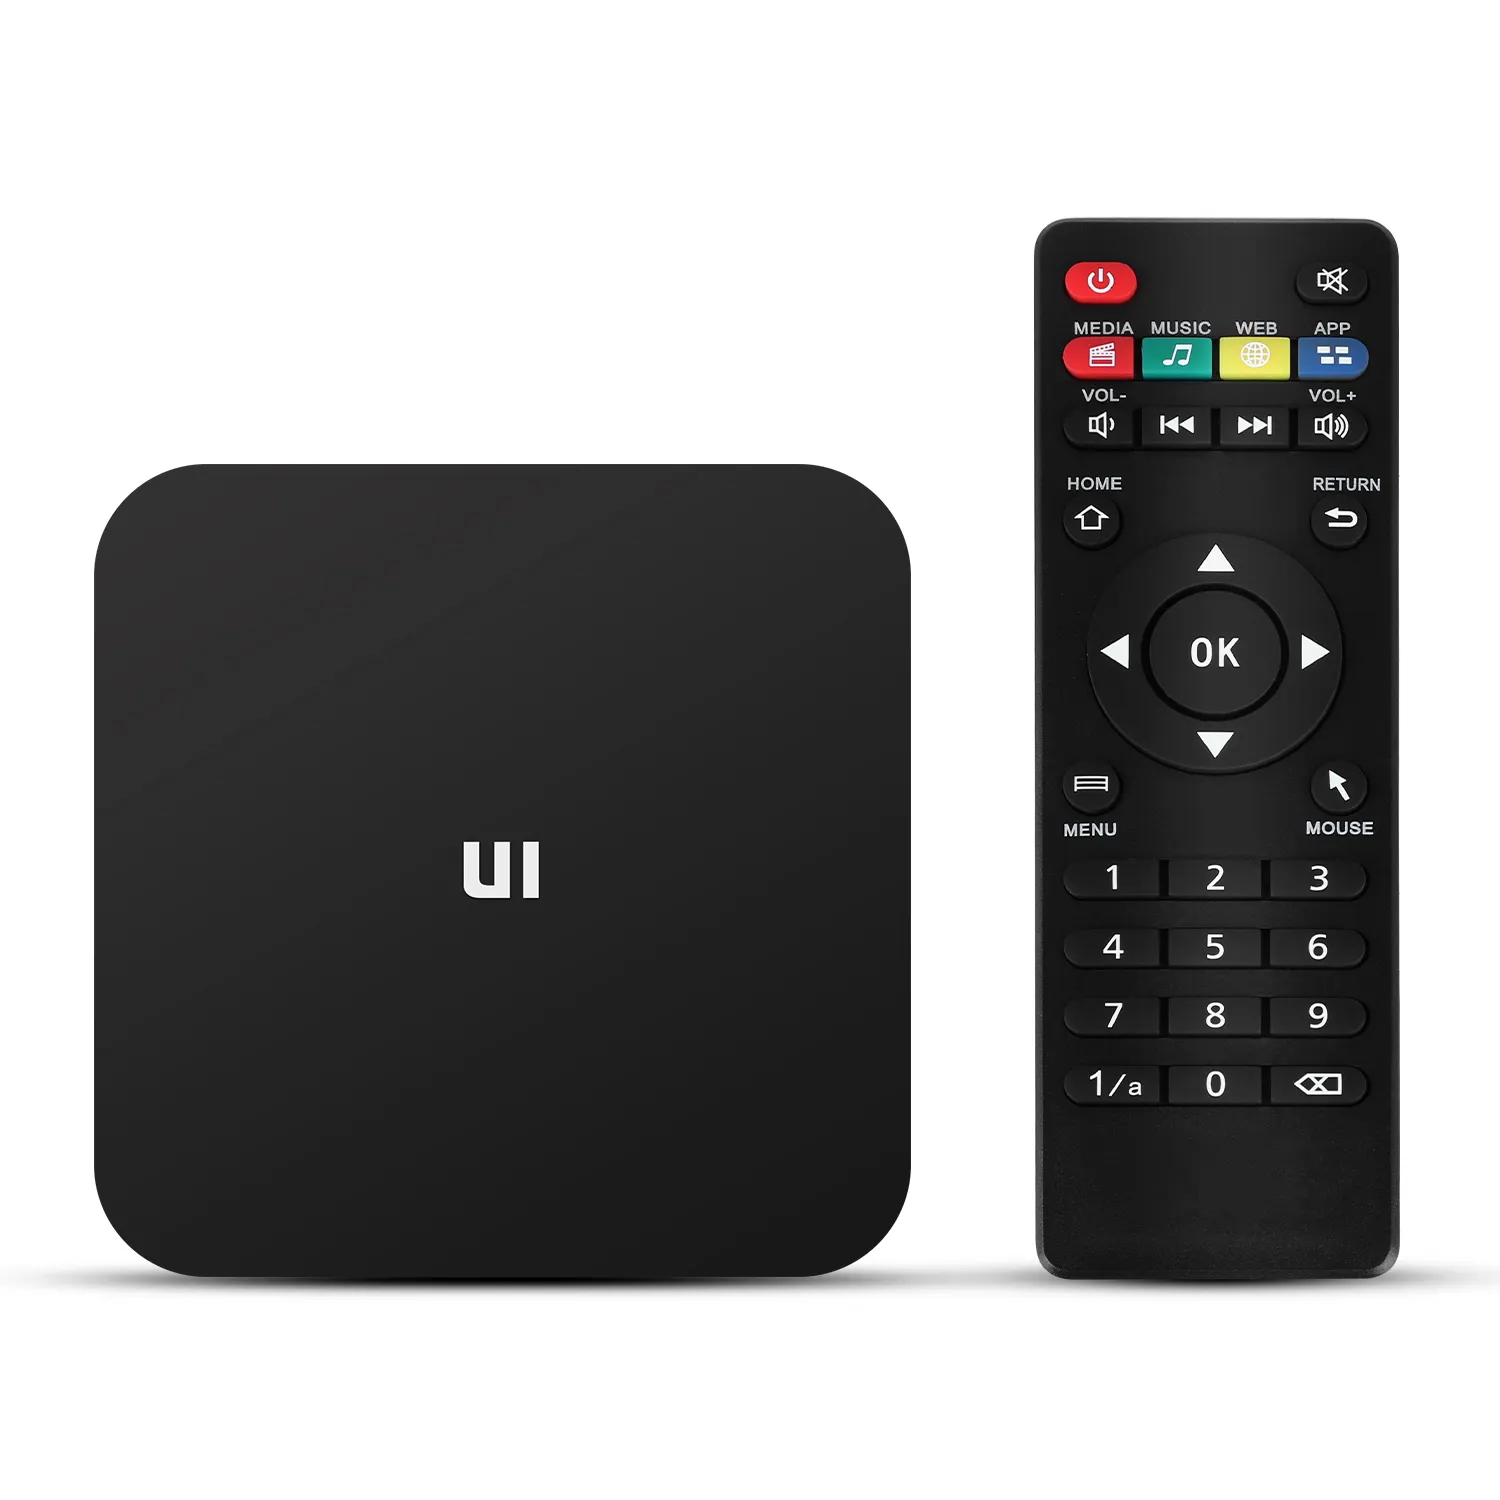 JUNUO Brand 2021 Latest Black Shell 2GB 16GB Best Android Box Mini TV Box Android TV